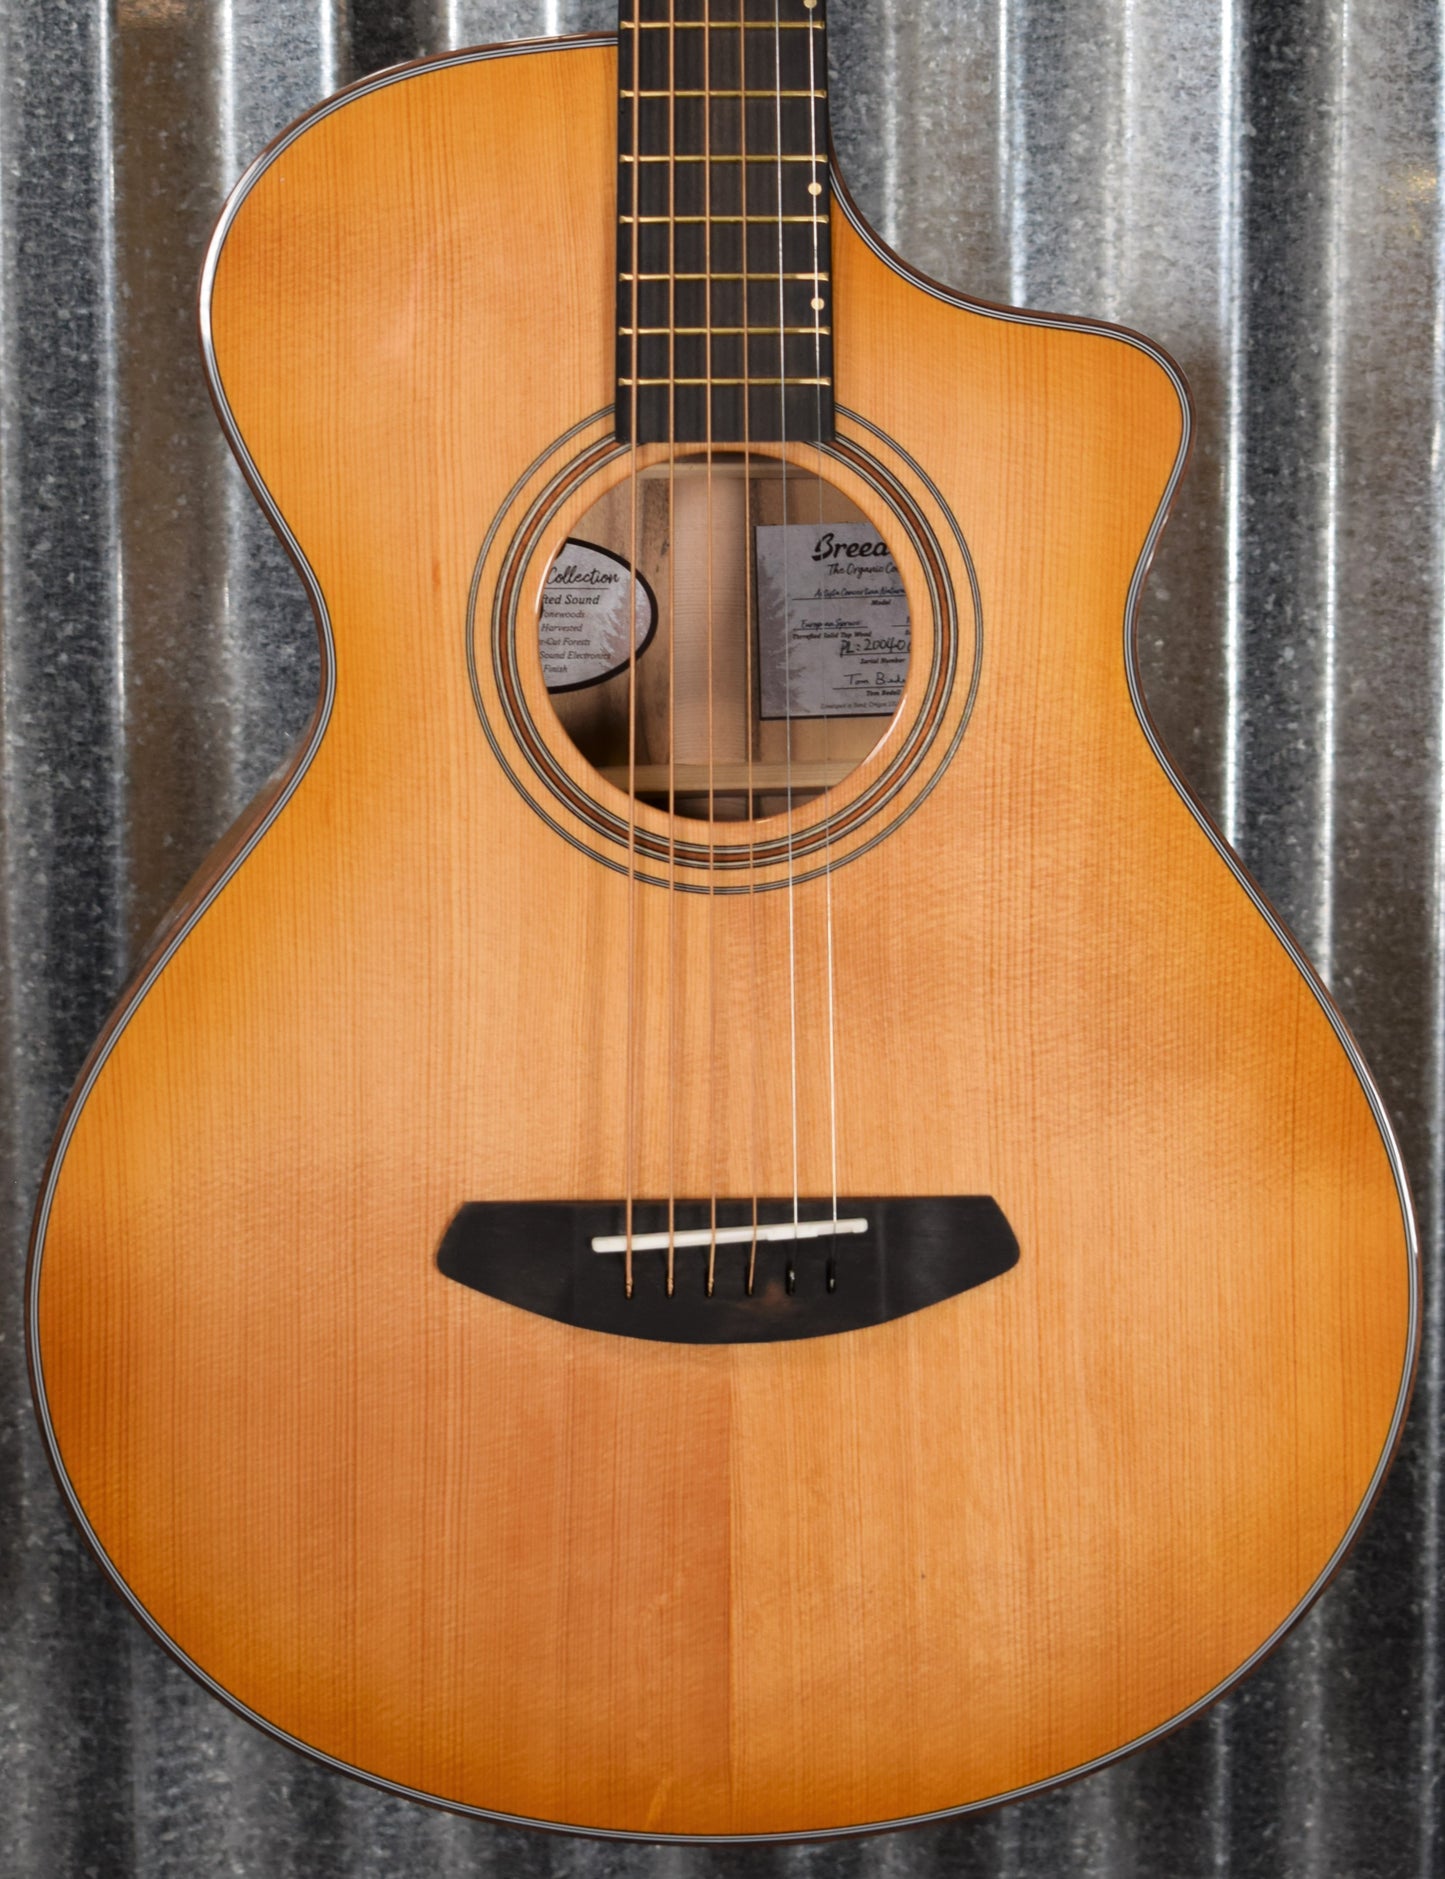 Breedlove Artista Concertina CE Myrtlewood Acoustic Electric Guitar B Stock #6795